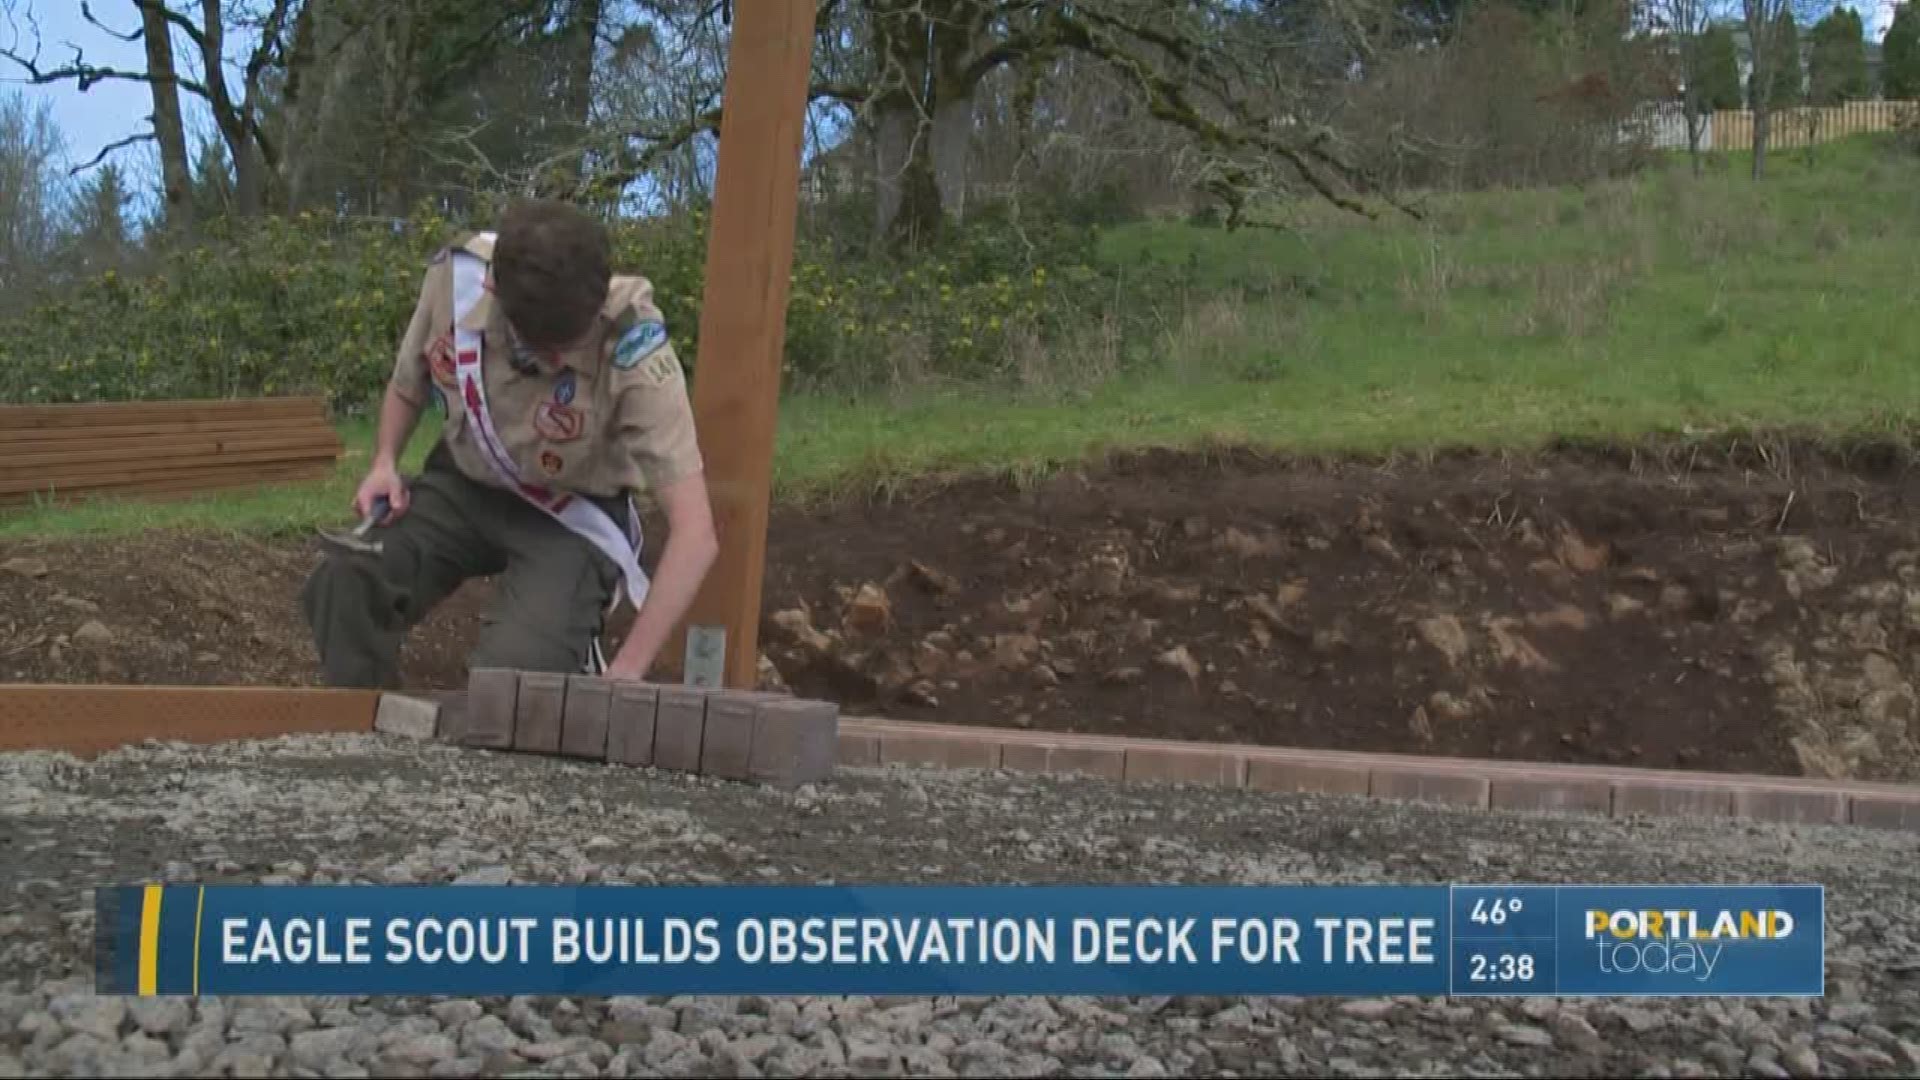 Eagle scout builds observation deck for tree